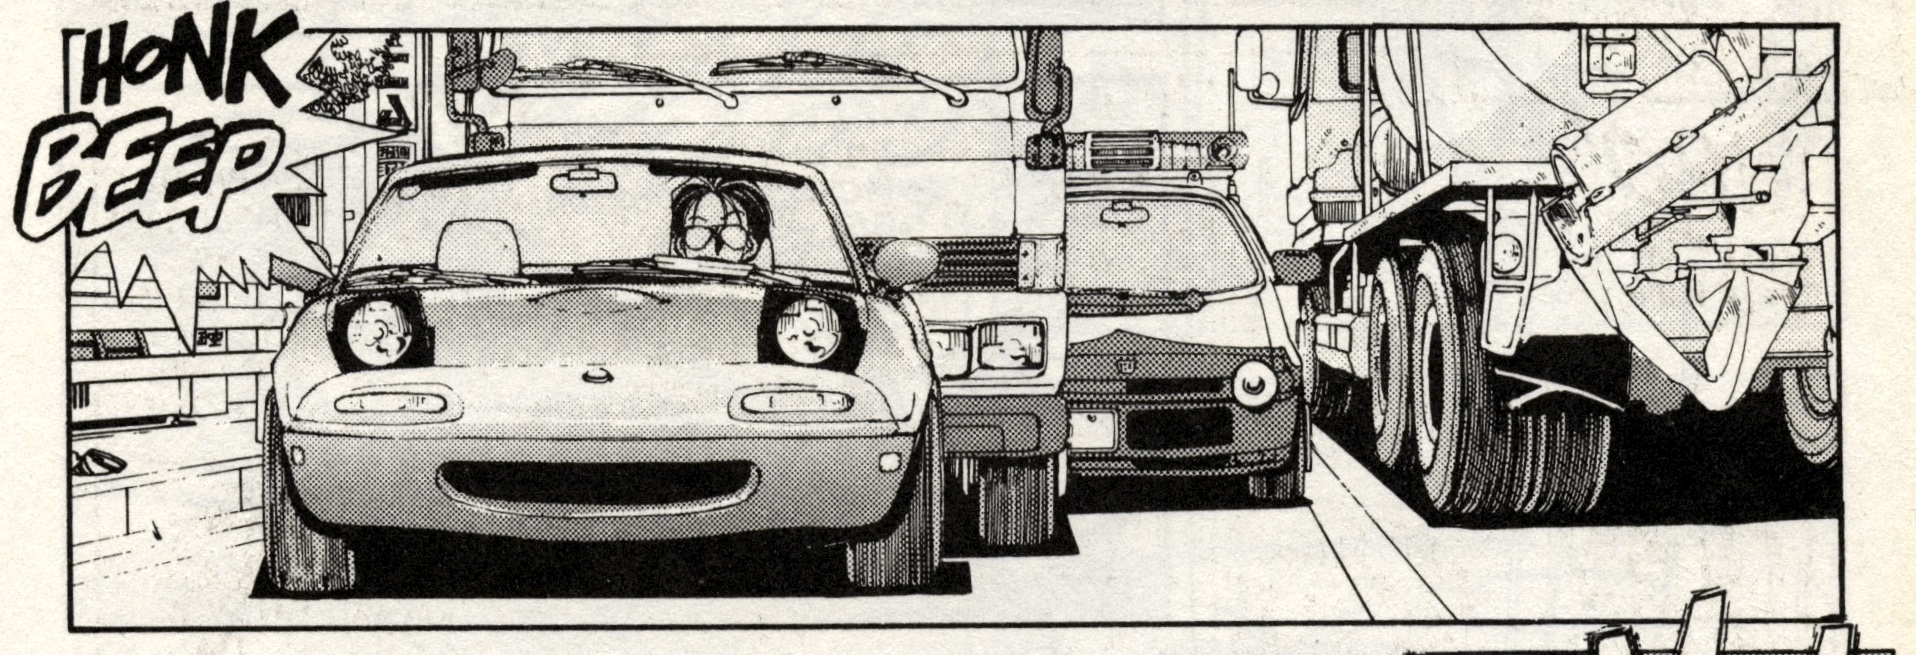 youre-under-arrest-manga-1-page-11-mazda-titan